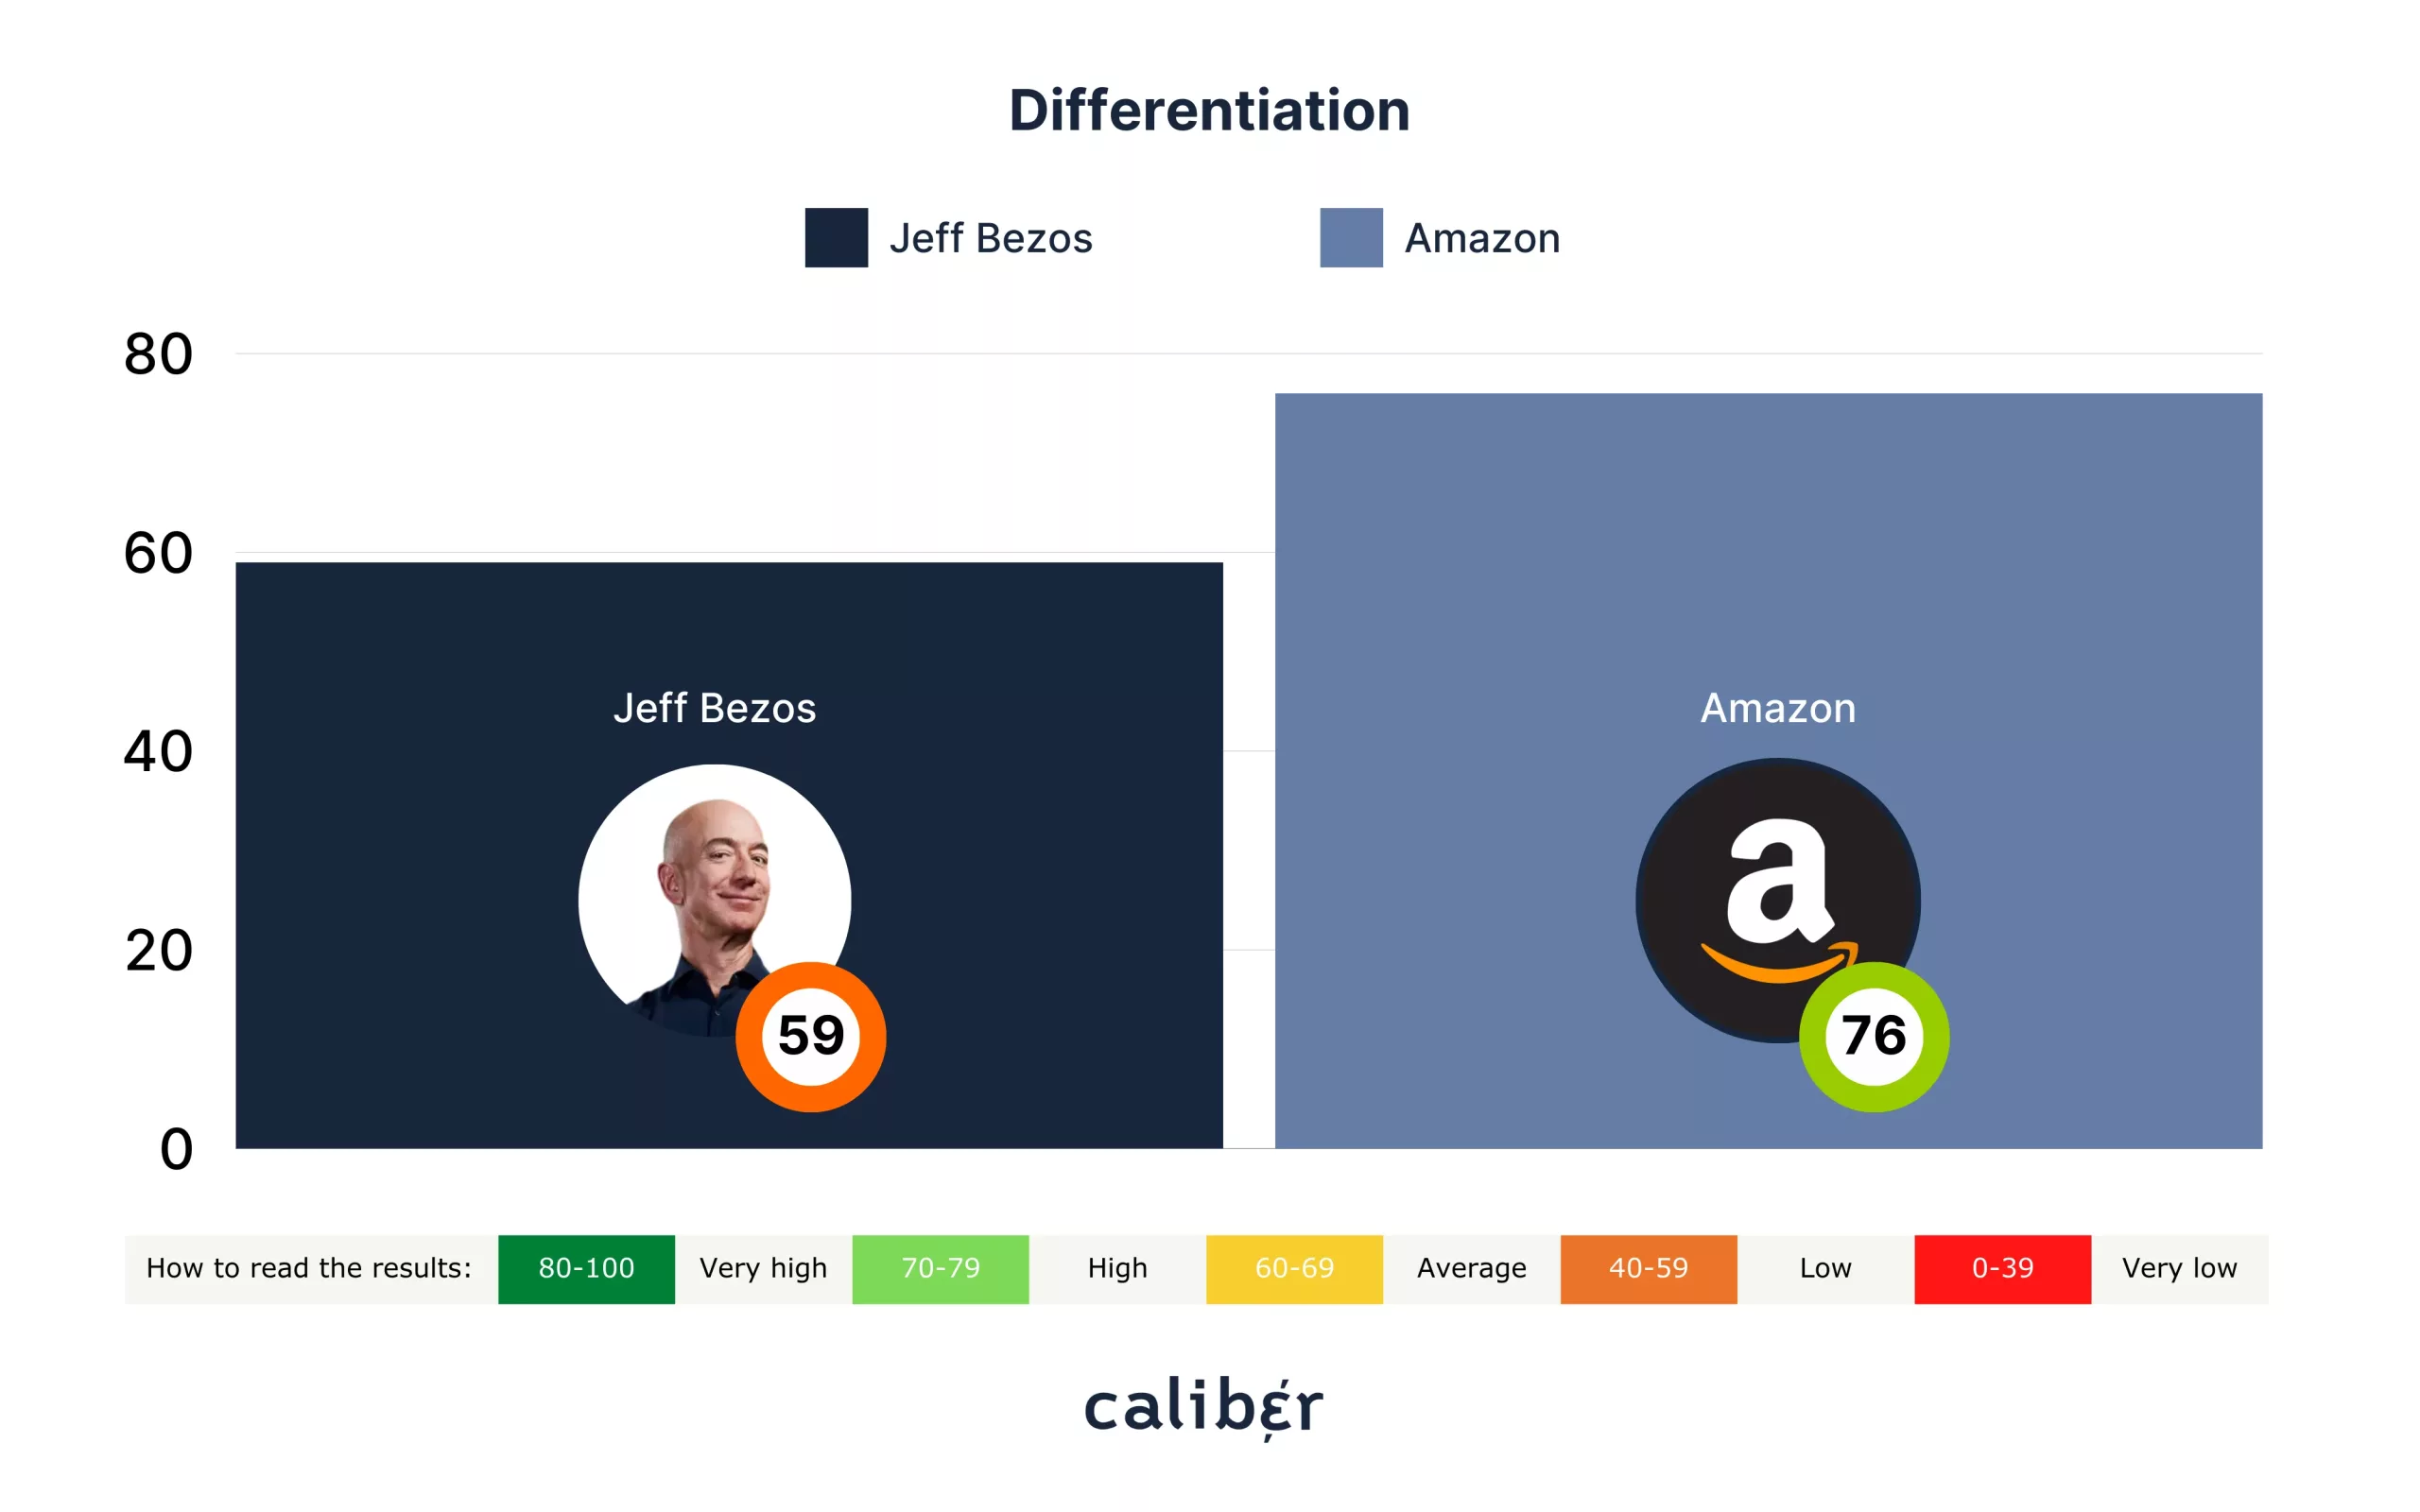 Jeff Bezos Differentiation Score